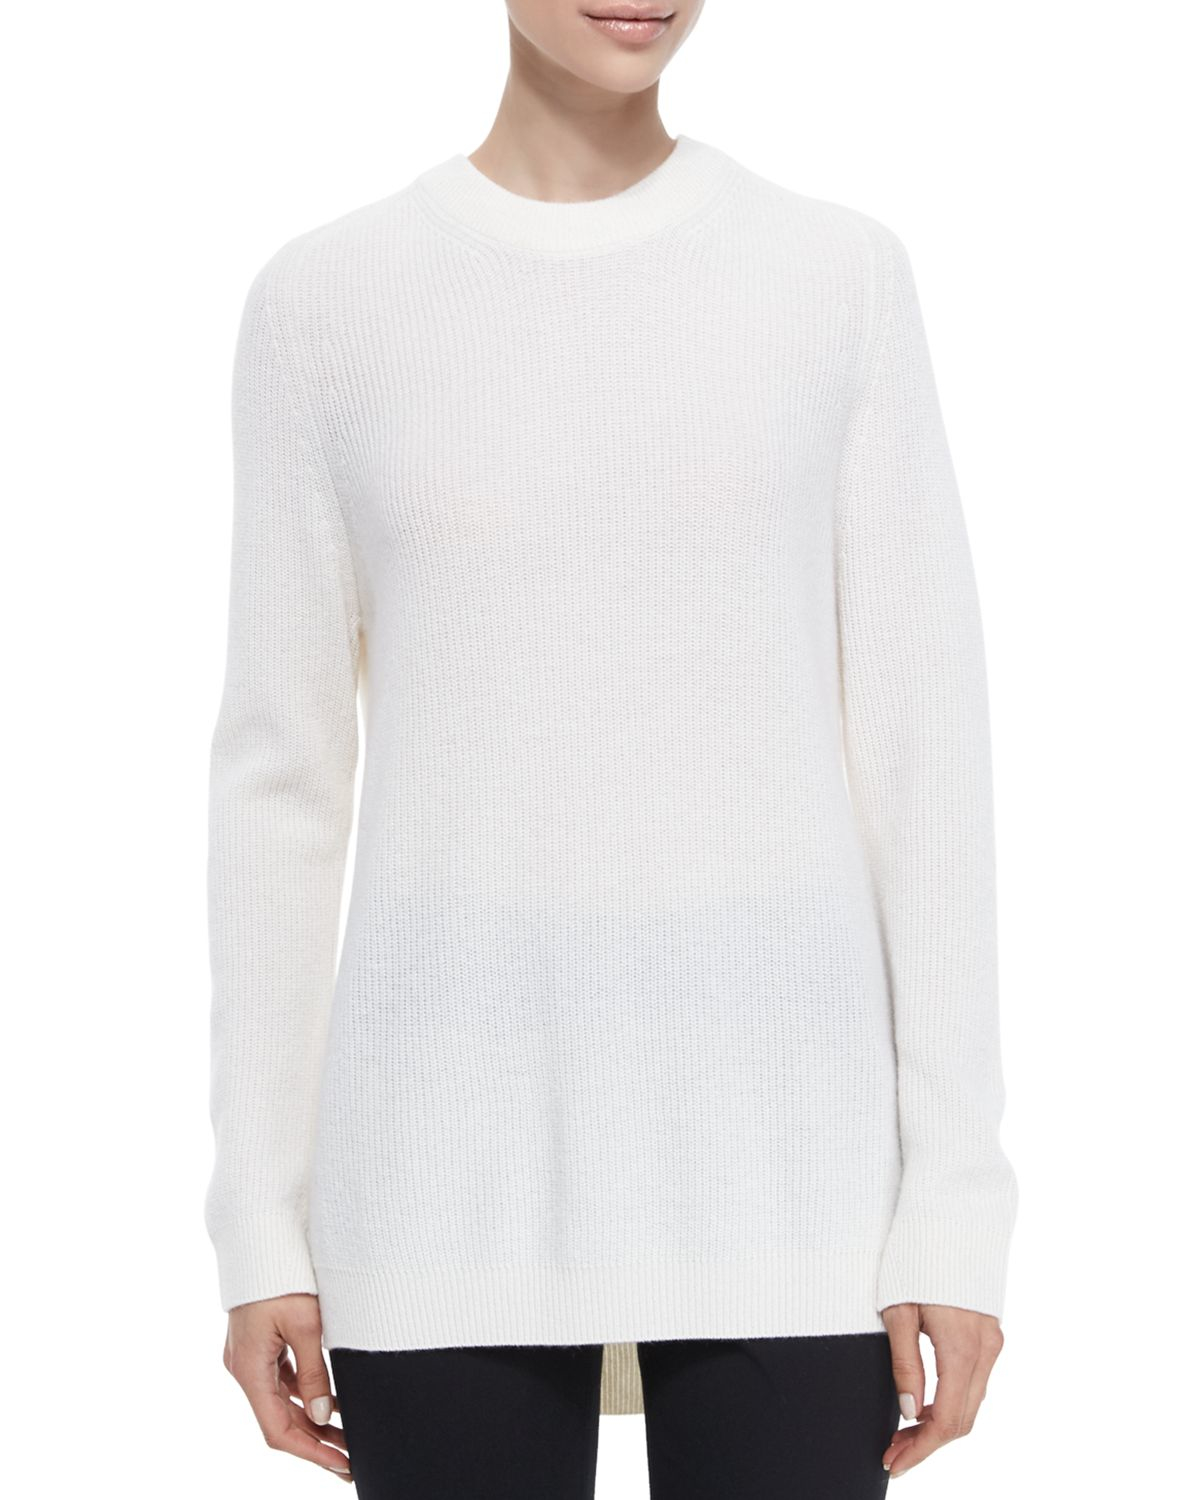 Rag & bone Valentina Cashmere Tunic Sweater in White | Lyst